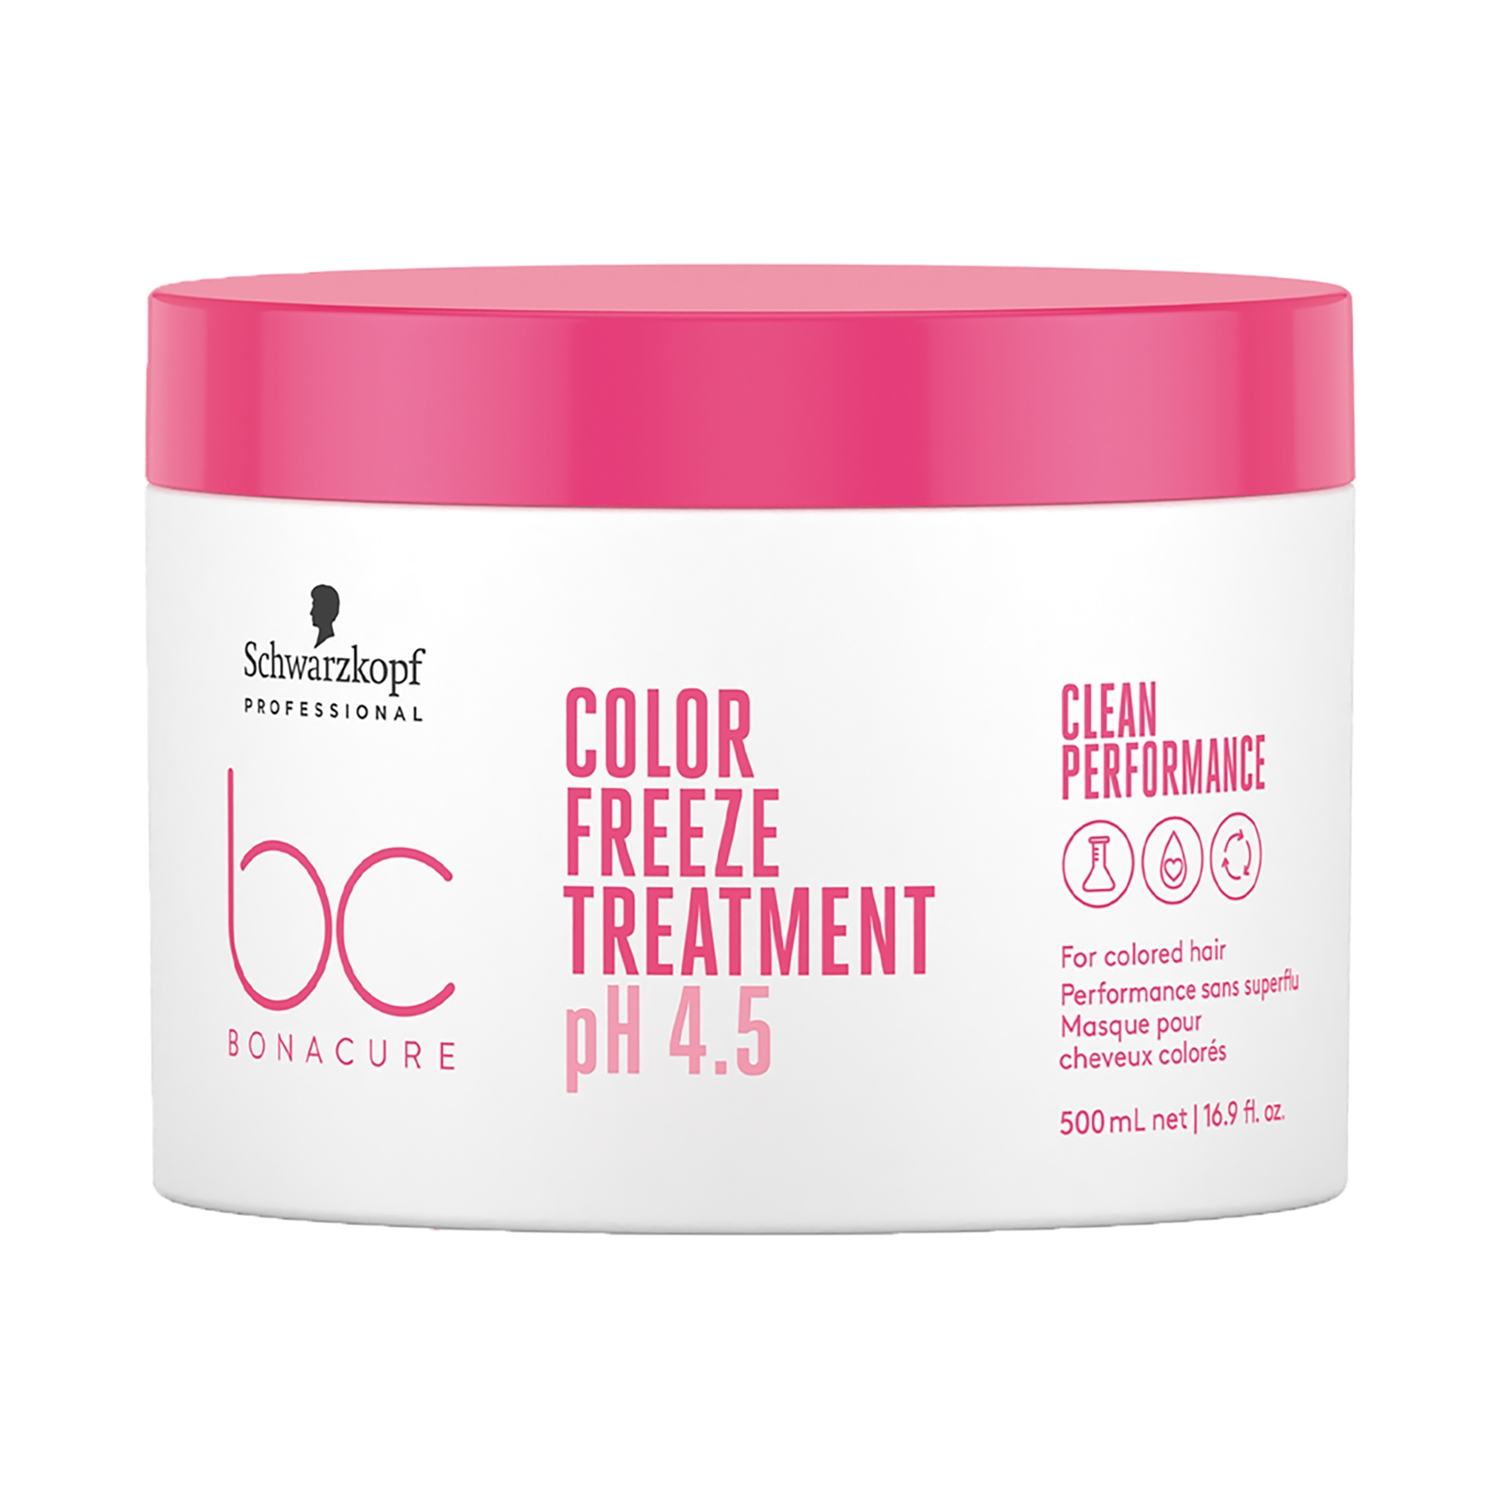 Schwarzkopf Professional Bonacure Color Freeze Treatment pH 4.5 (500ml)